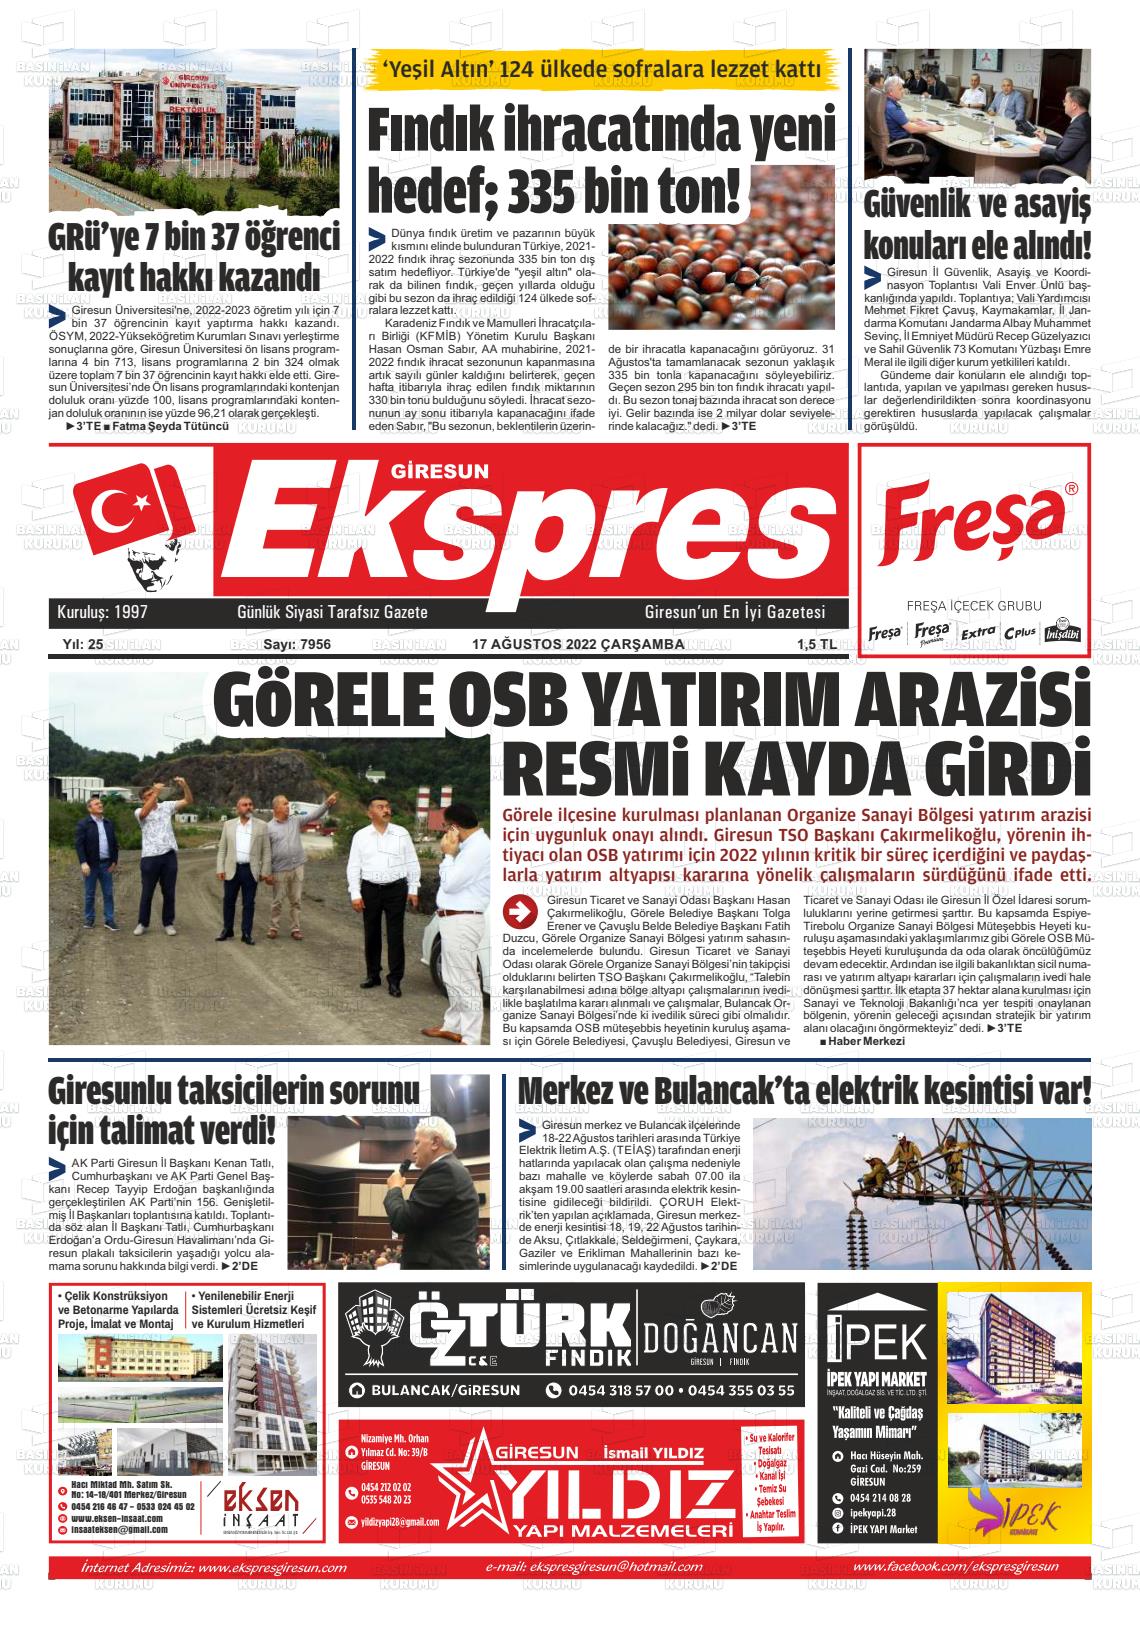 17 Ağustos 2022 Giresun Ekspres Gazete Manşeti